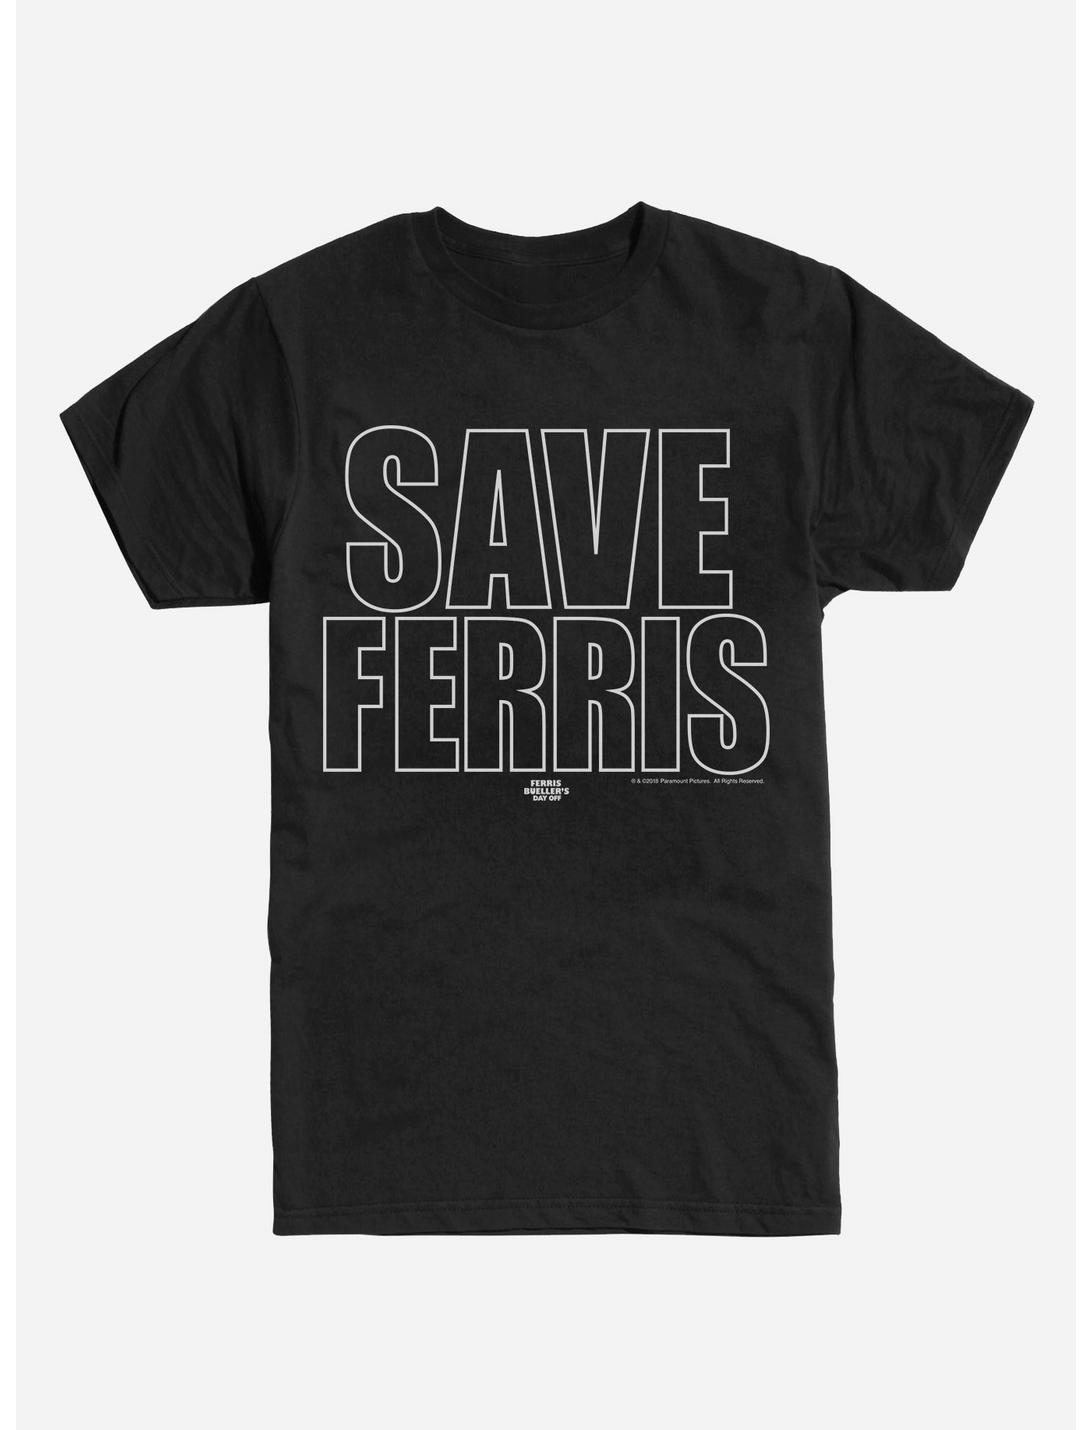 Ferris Bueller's Day Off Save Ferris T-Shirt, BLACK, hi-res